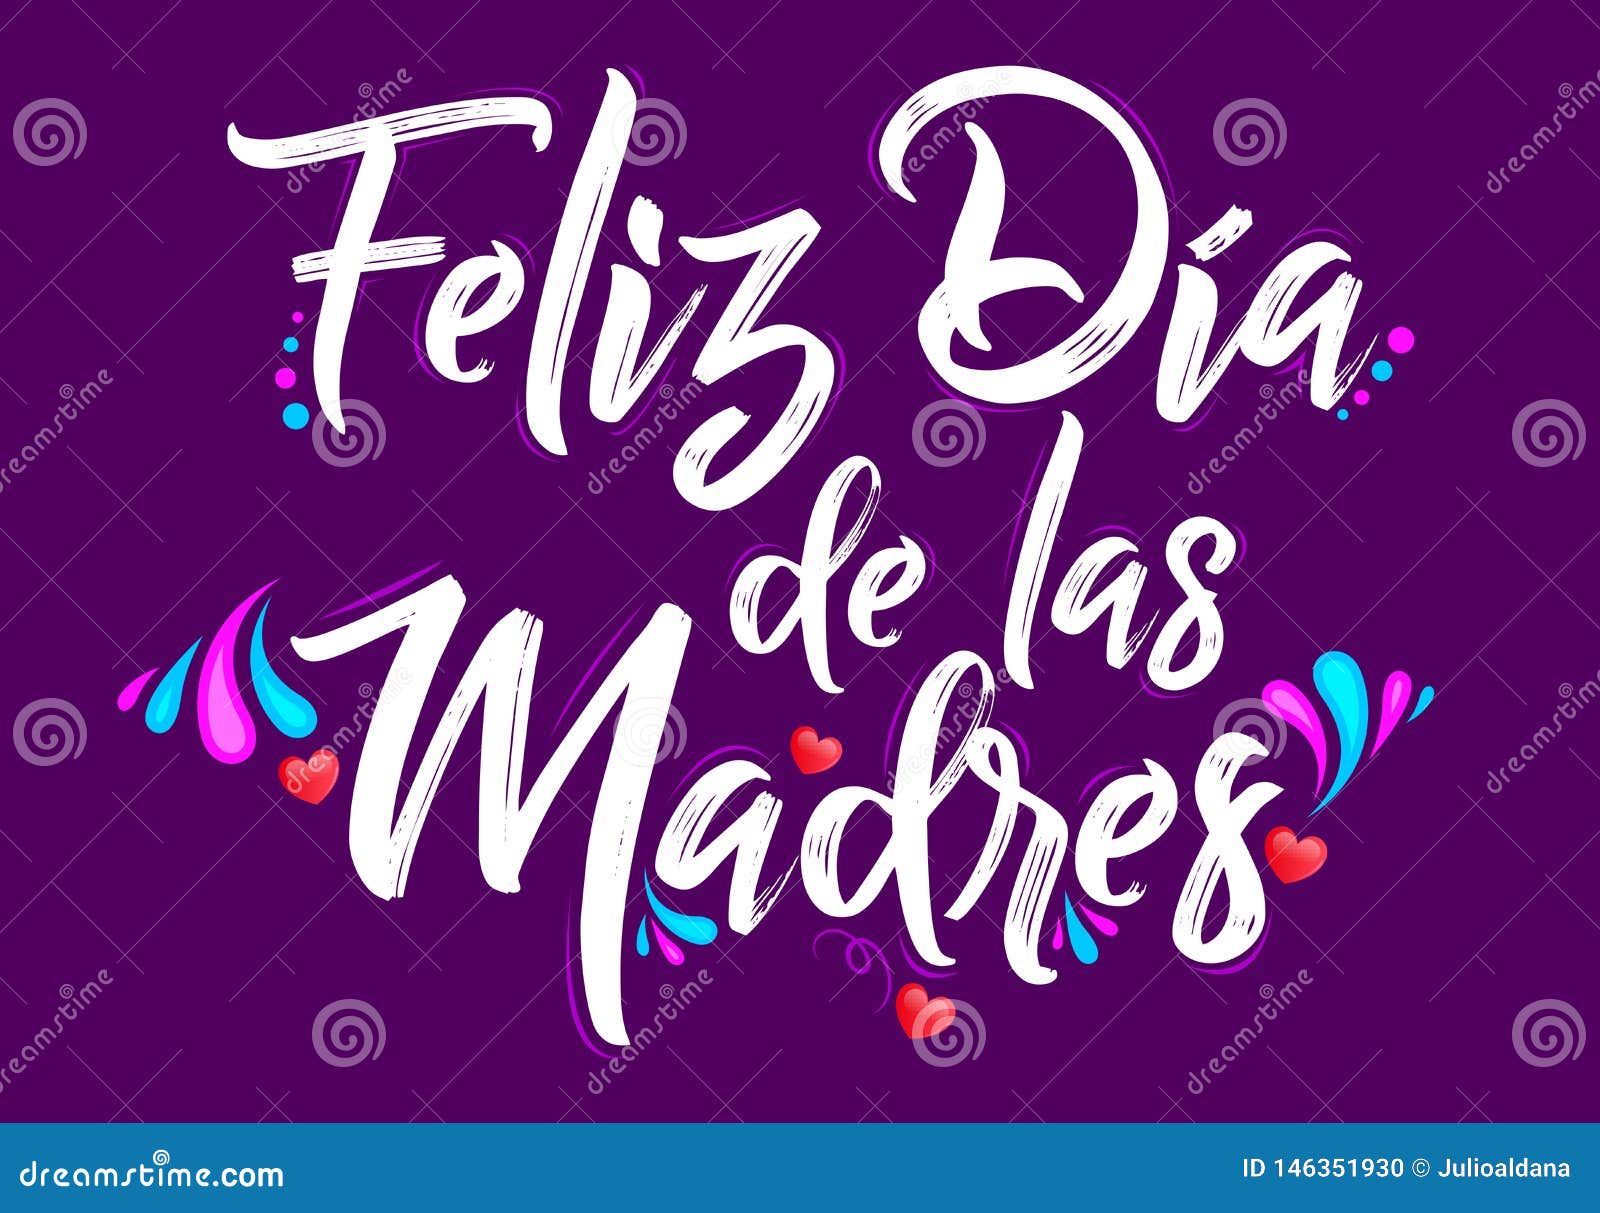 feliz dia de las madres, happy mothers day spanish translation message